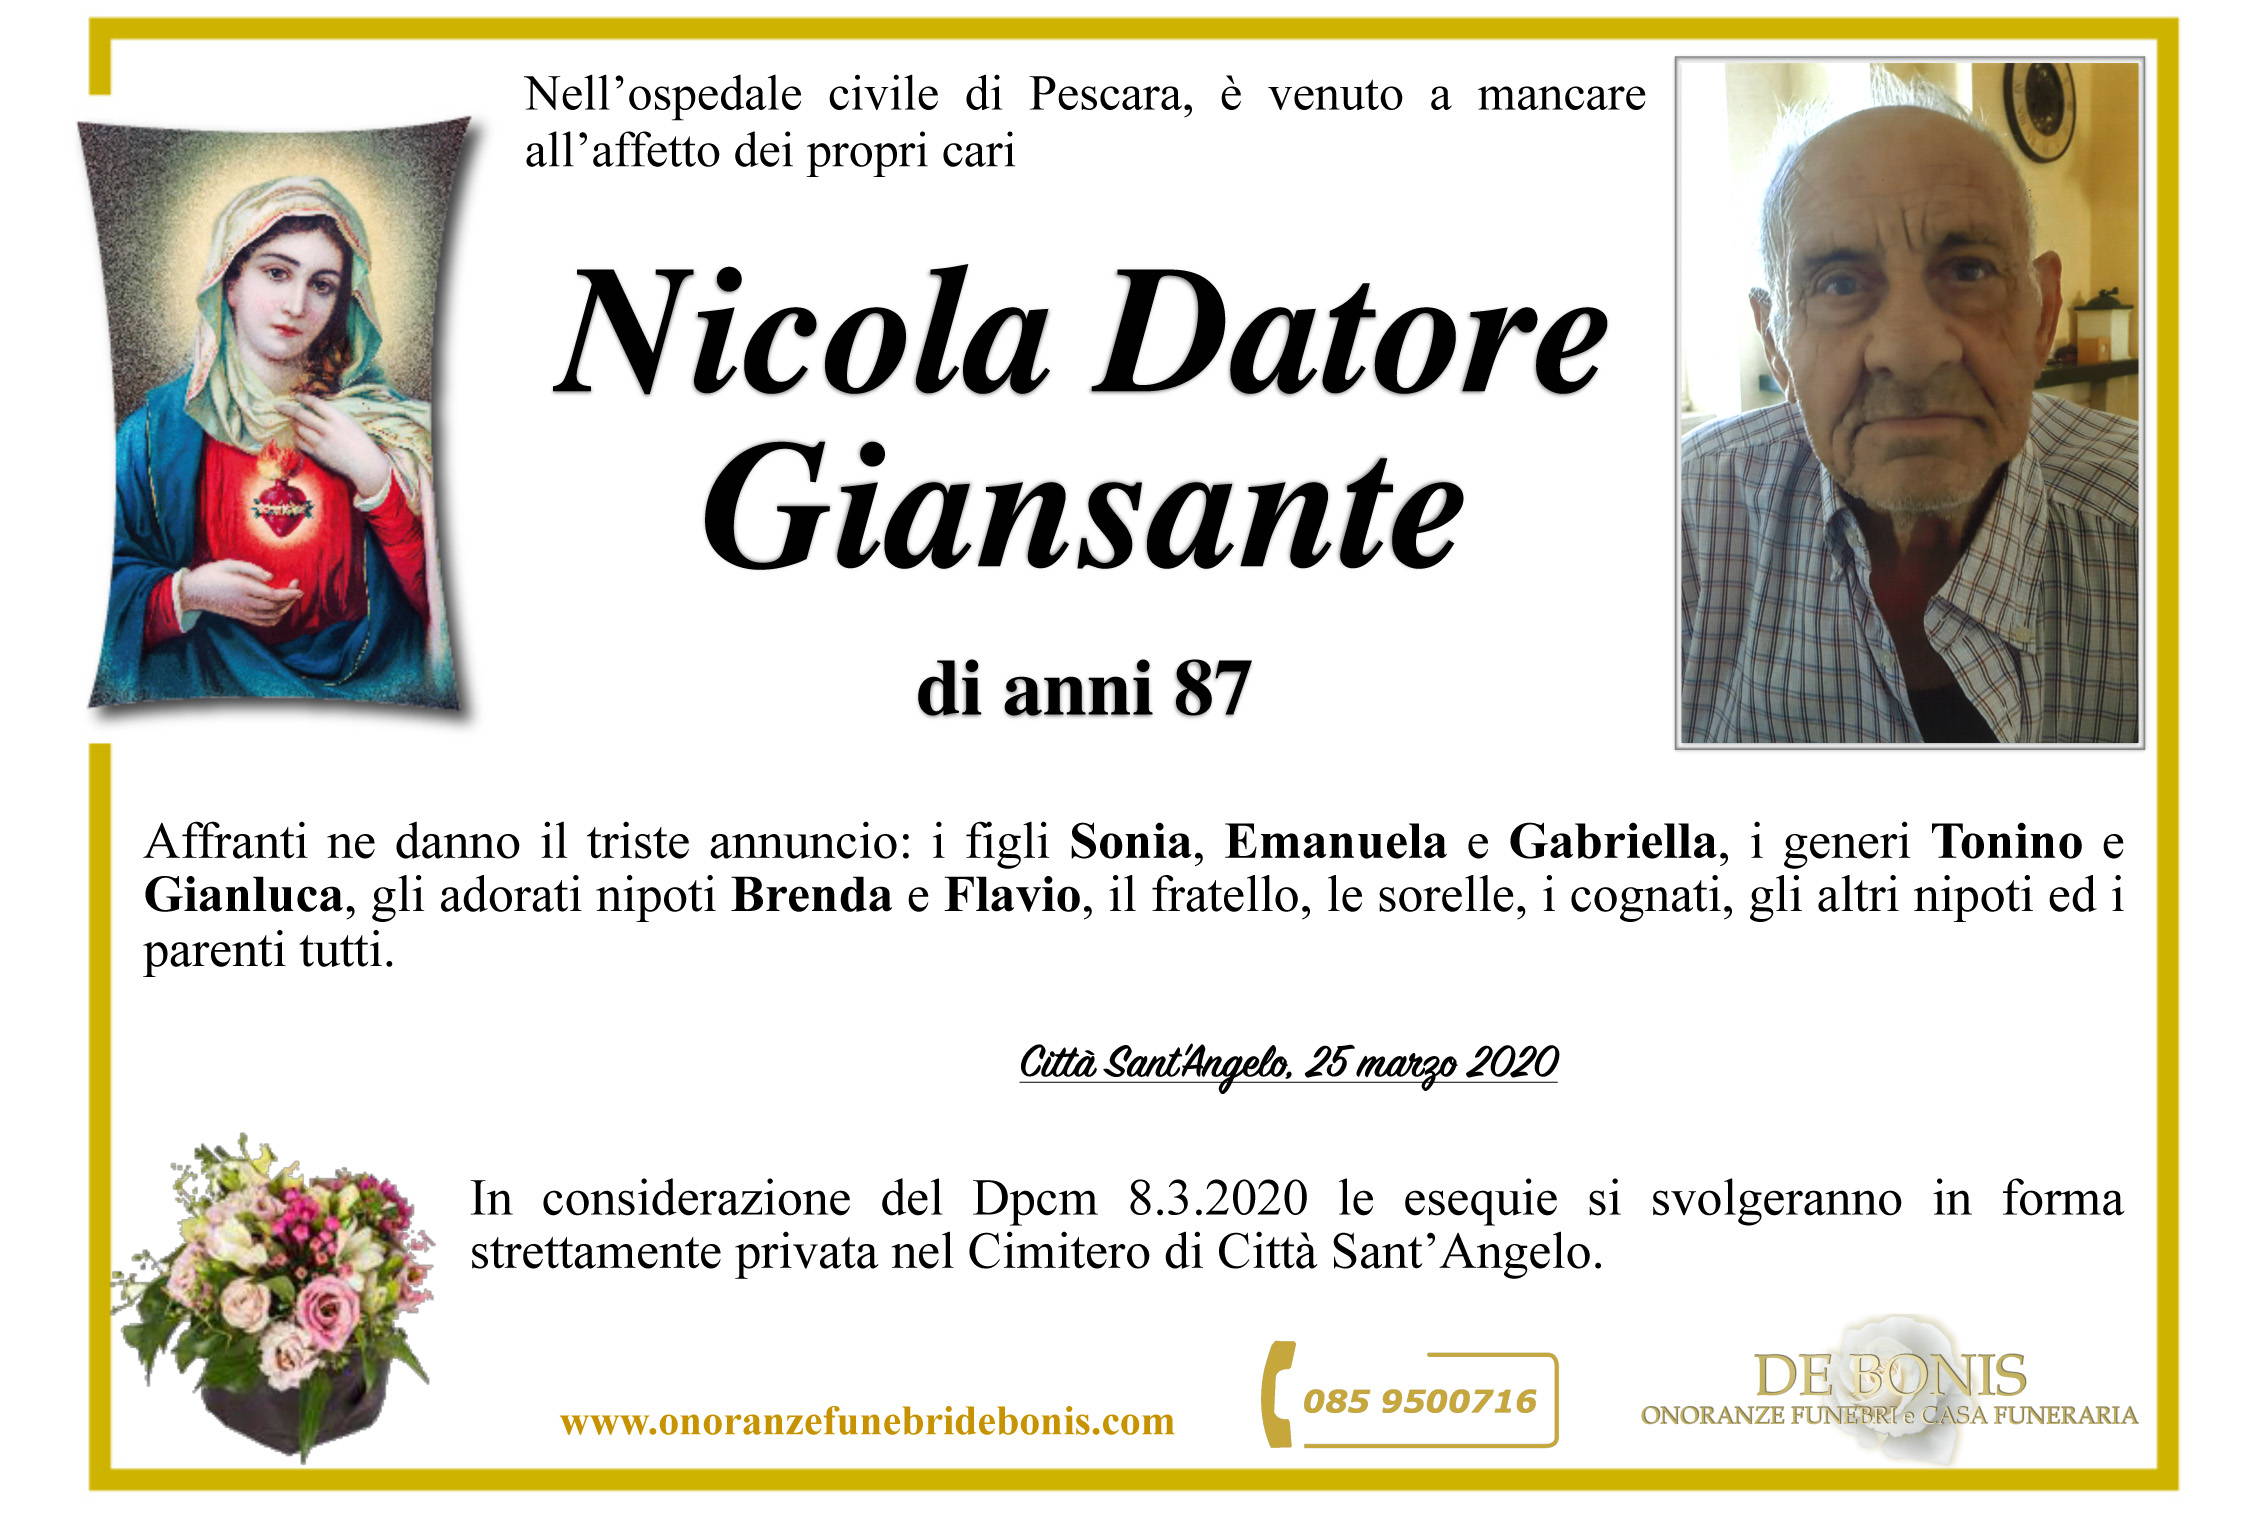 Nicola Datore Giansante